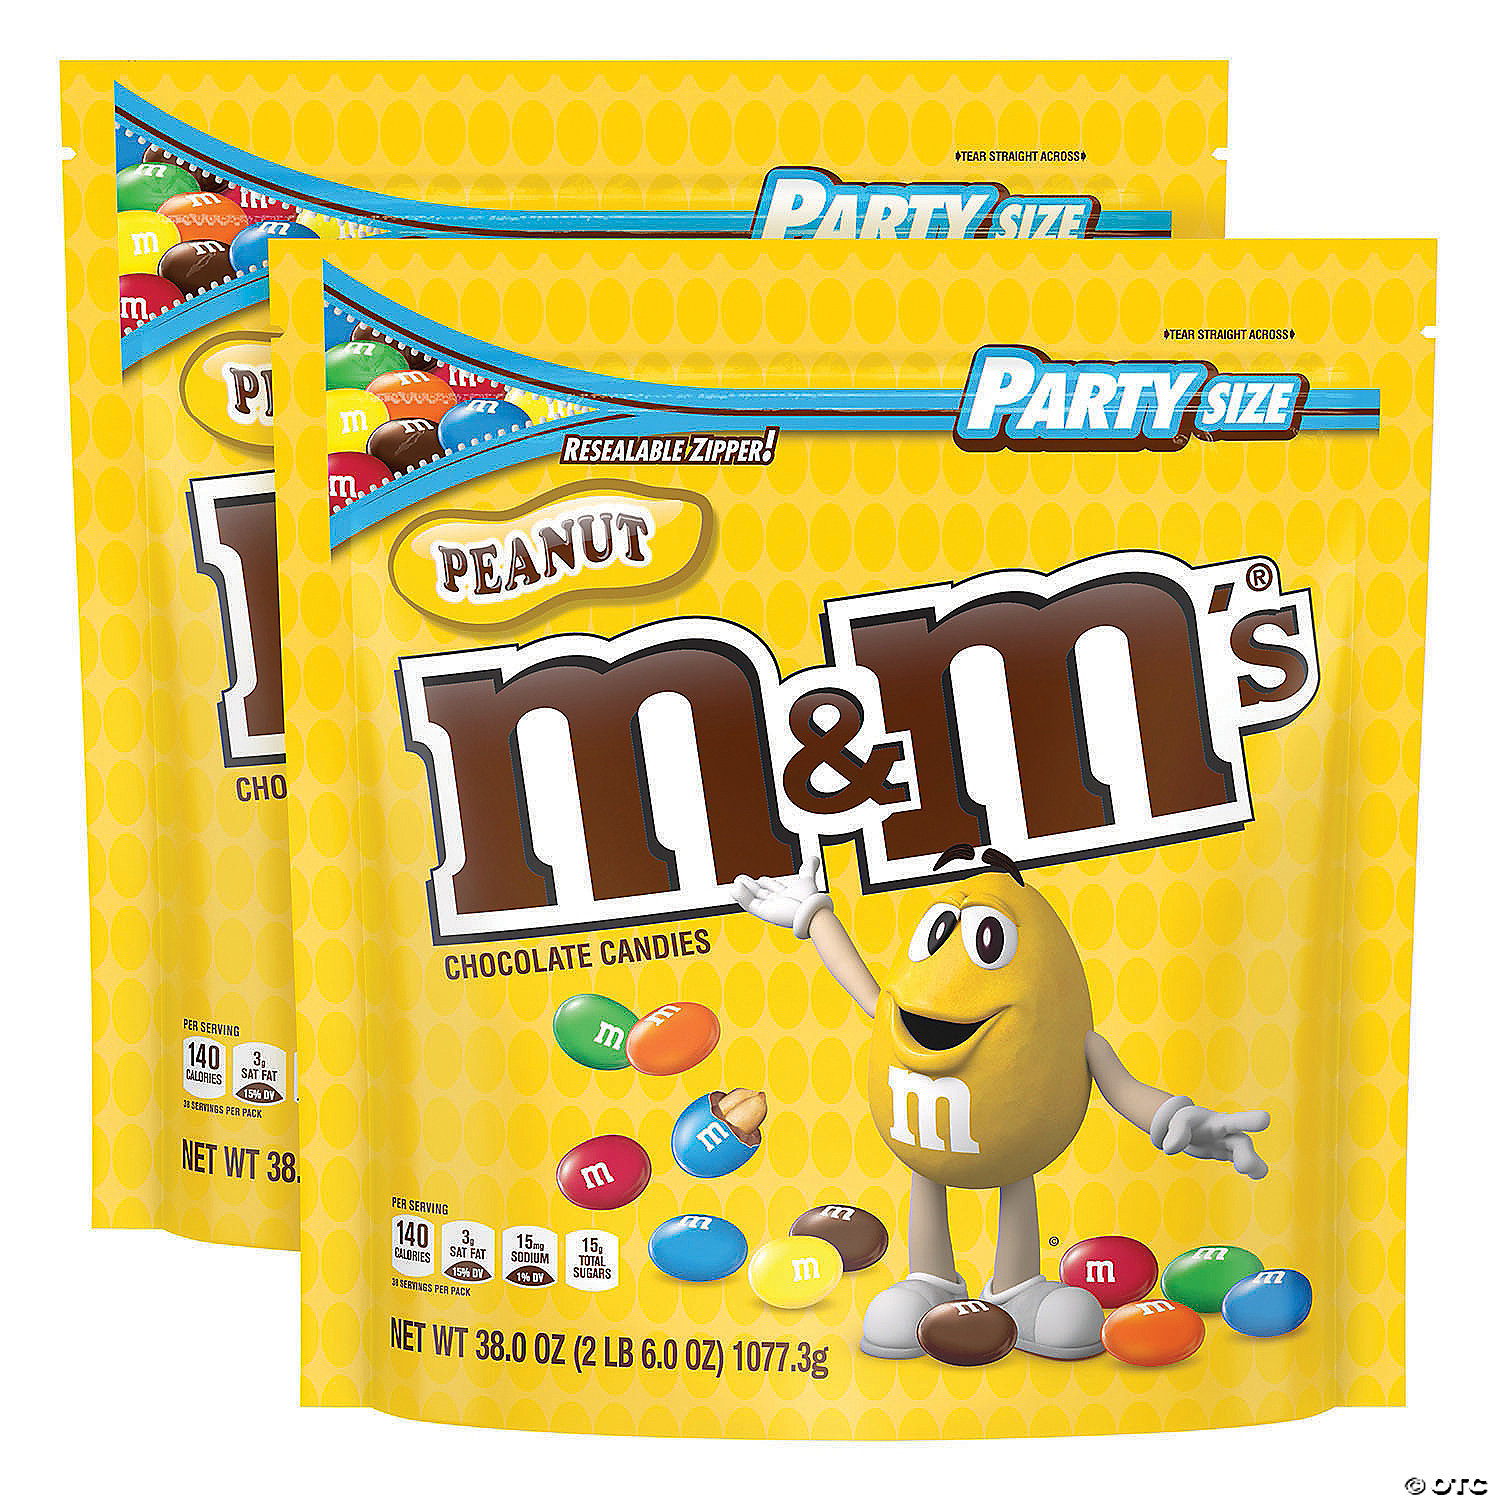 M&M's Peanut Milk Chocolate Candy, Full Size - 1.74 oz Pouch